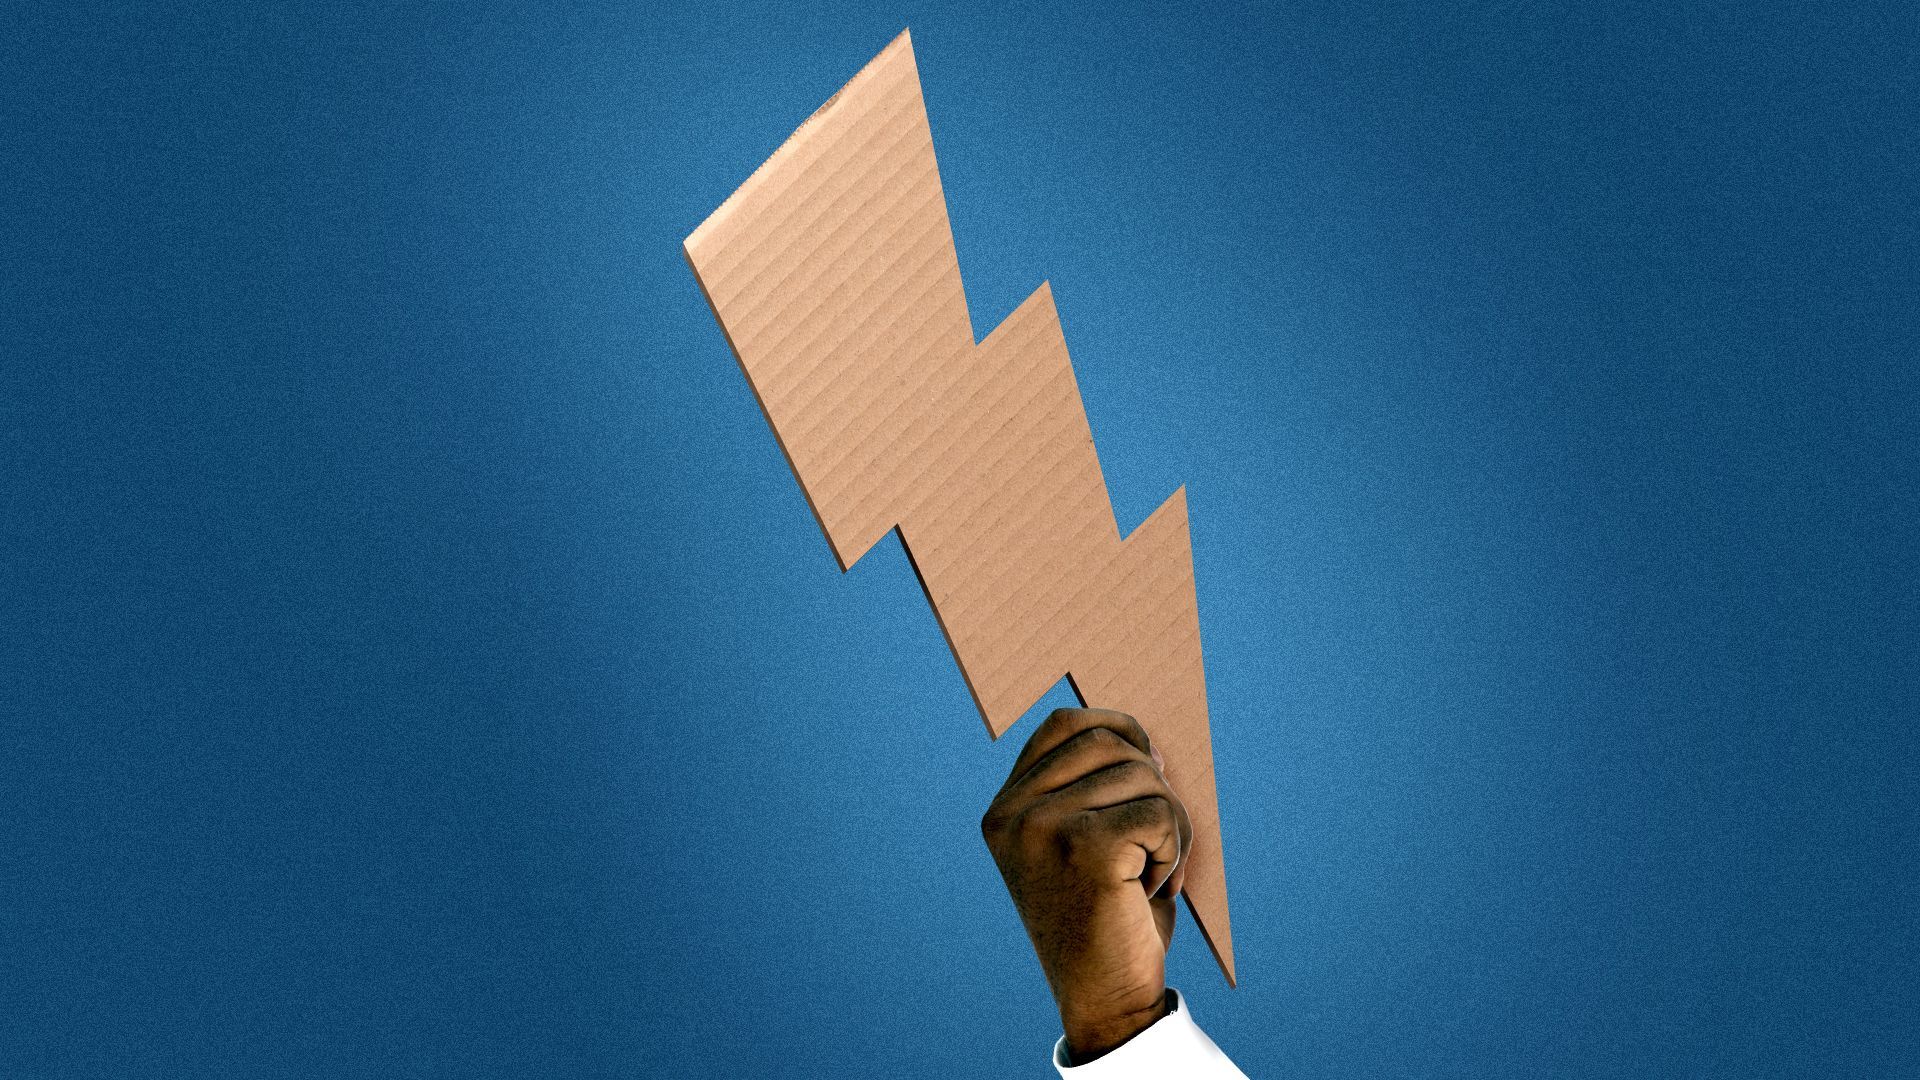 Illustration of a hand holding a lightning bolt-shaped cardboard